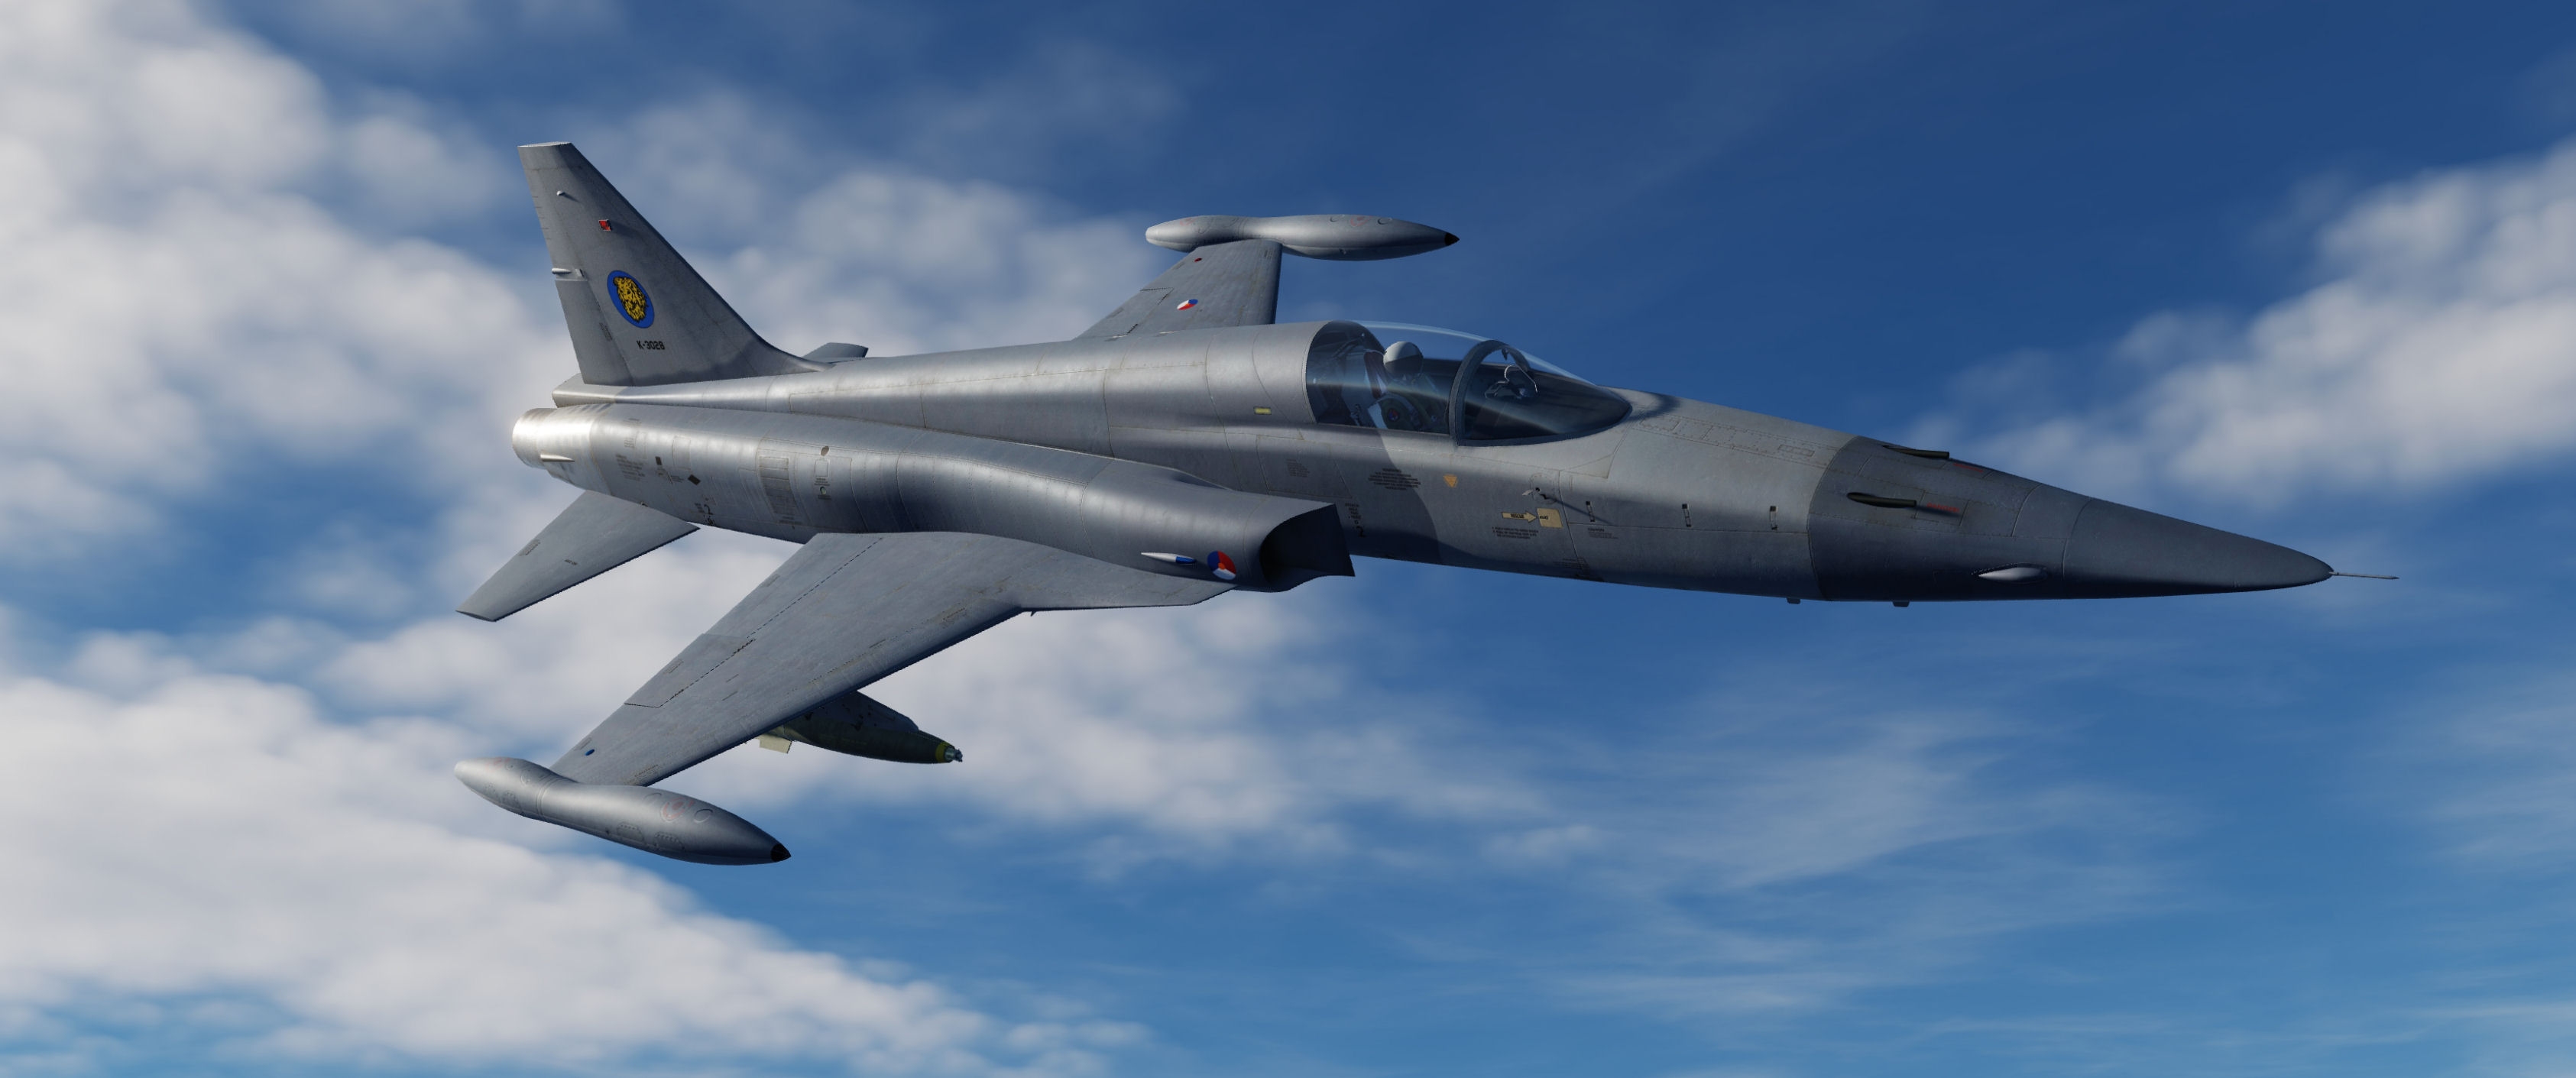 RNLAF NF5 (F-16 Camo) 4x F16 Test Skin + WingTipTanks.